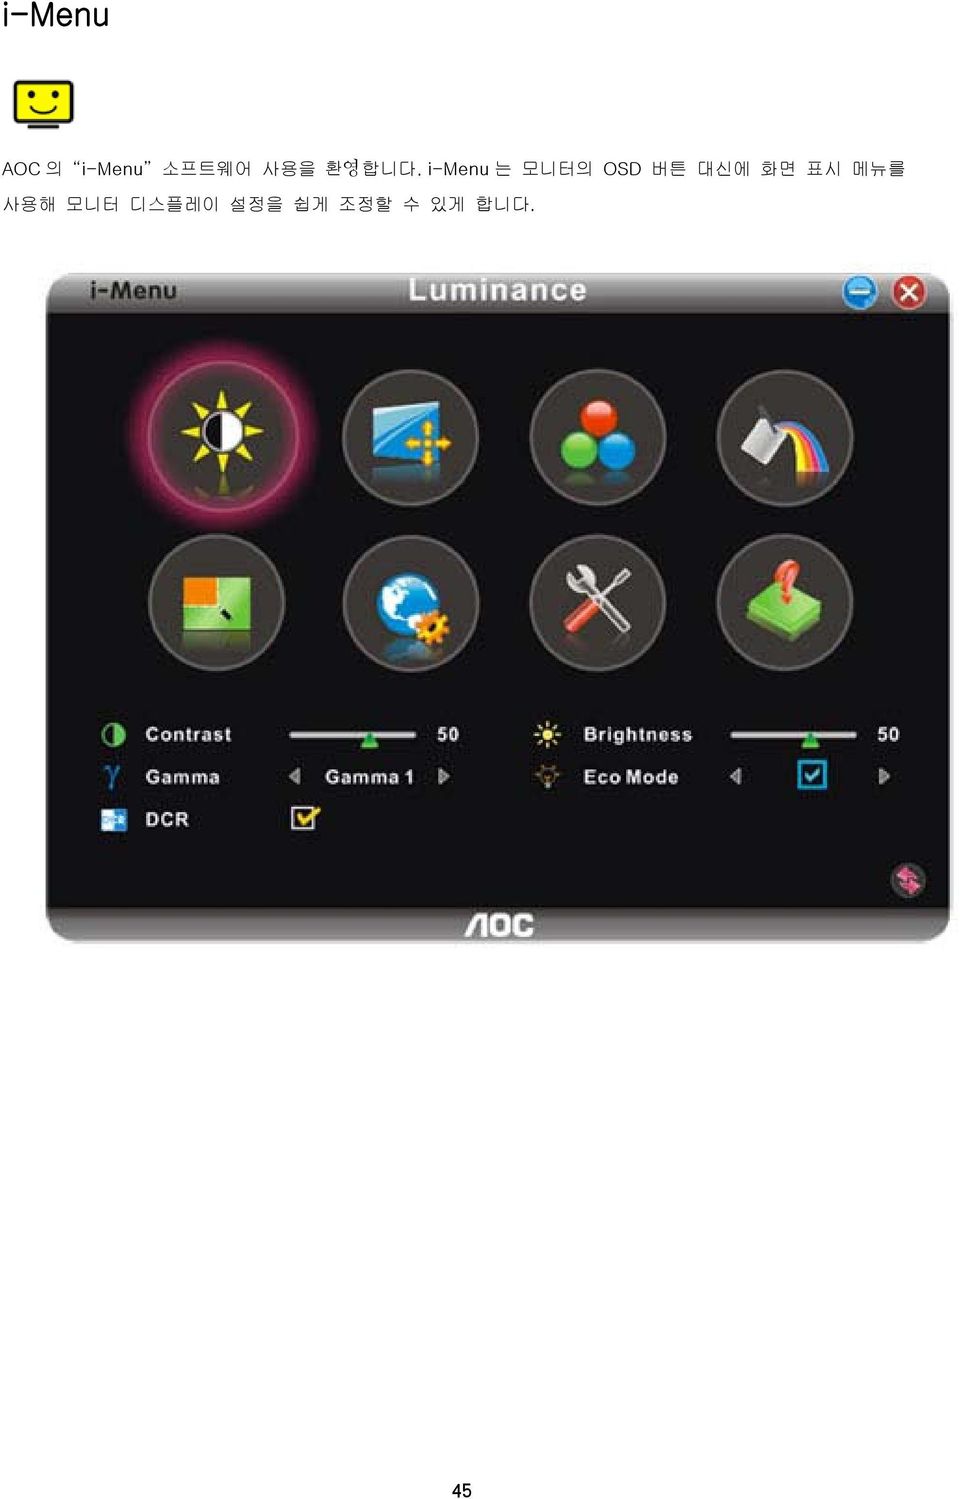 i-menu 는 모니터의 OSD 버튼 대신에 화면